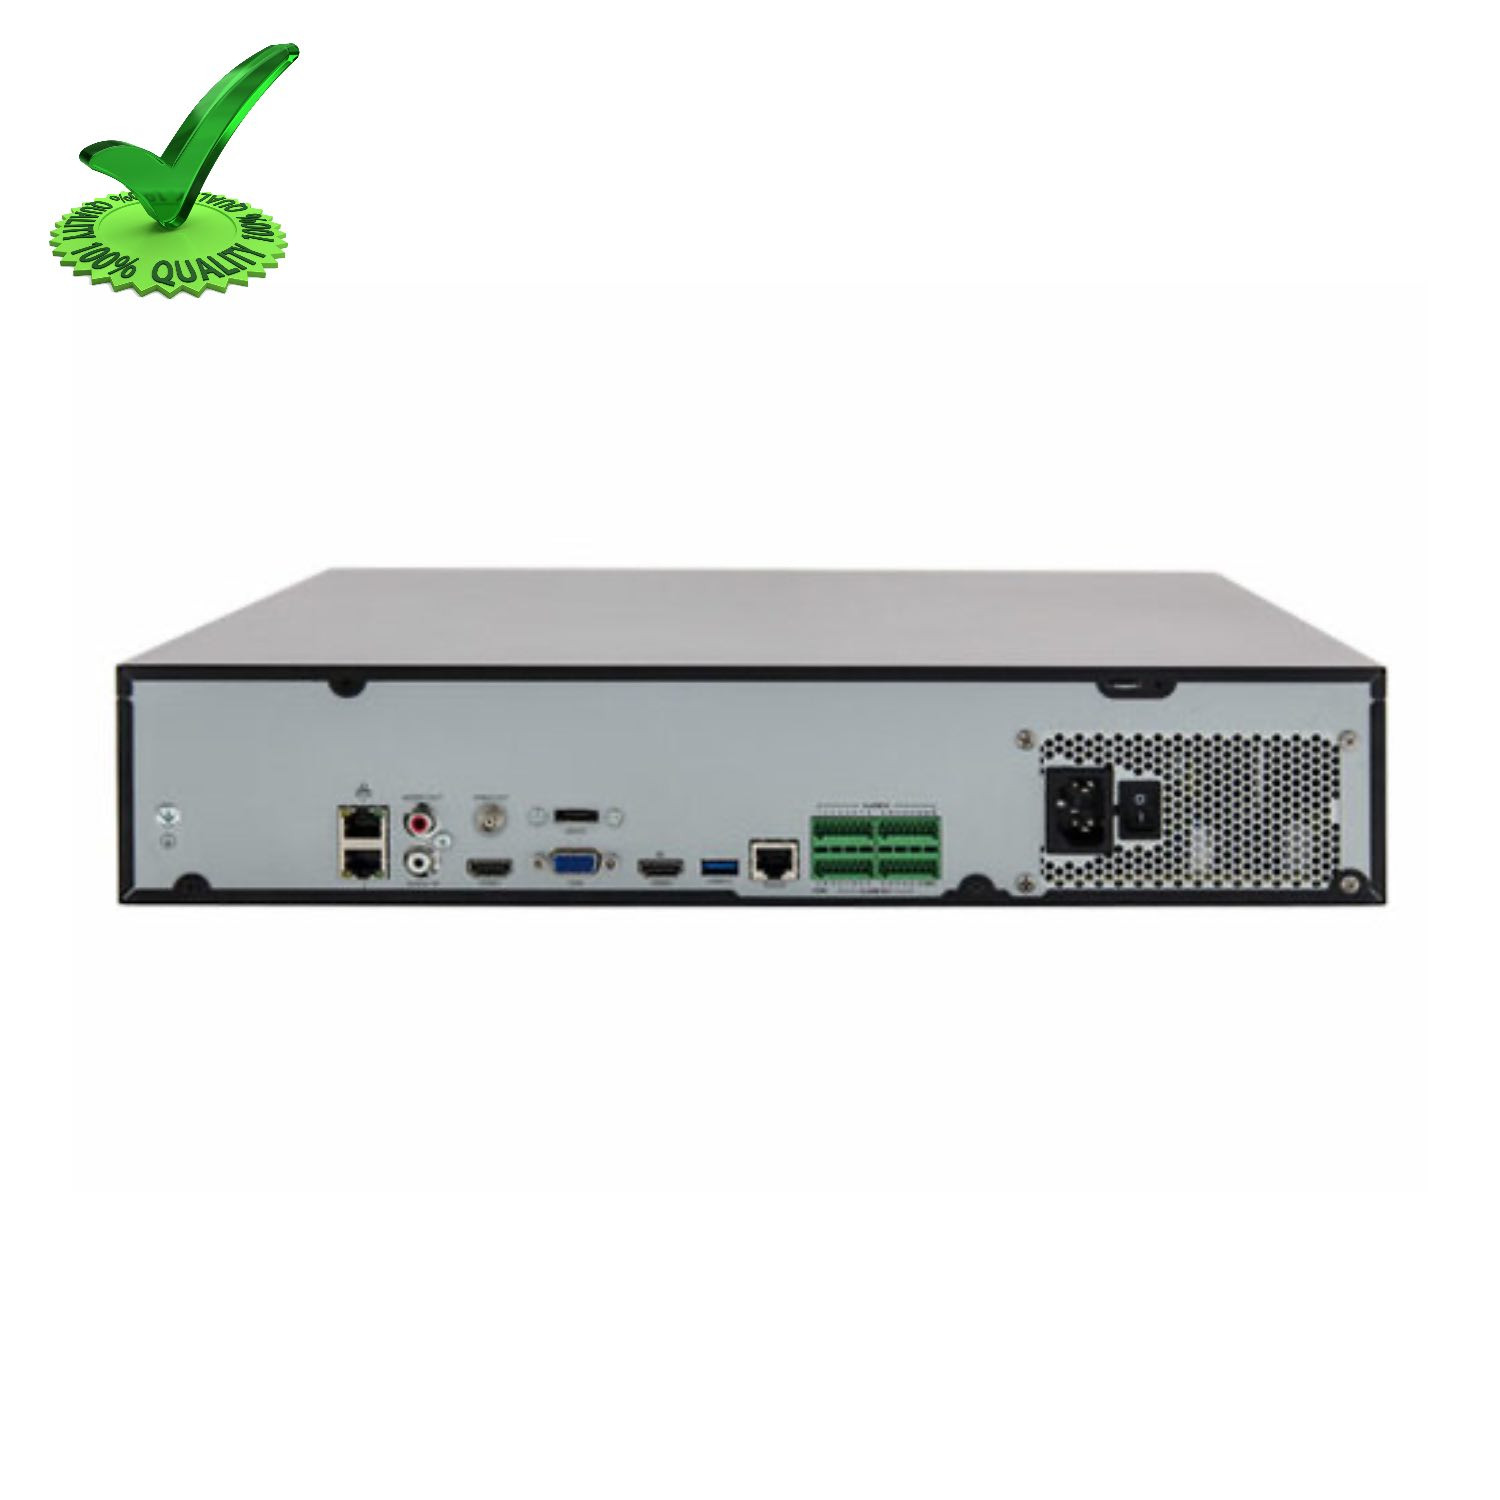 Uniview NVR308-64E-B 64Ch HD Network Video Recorder